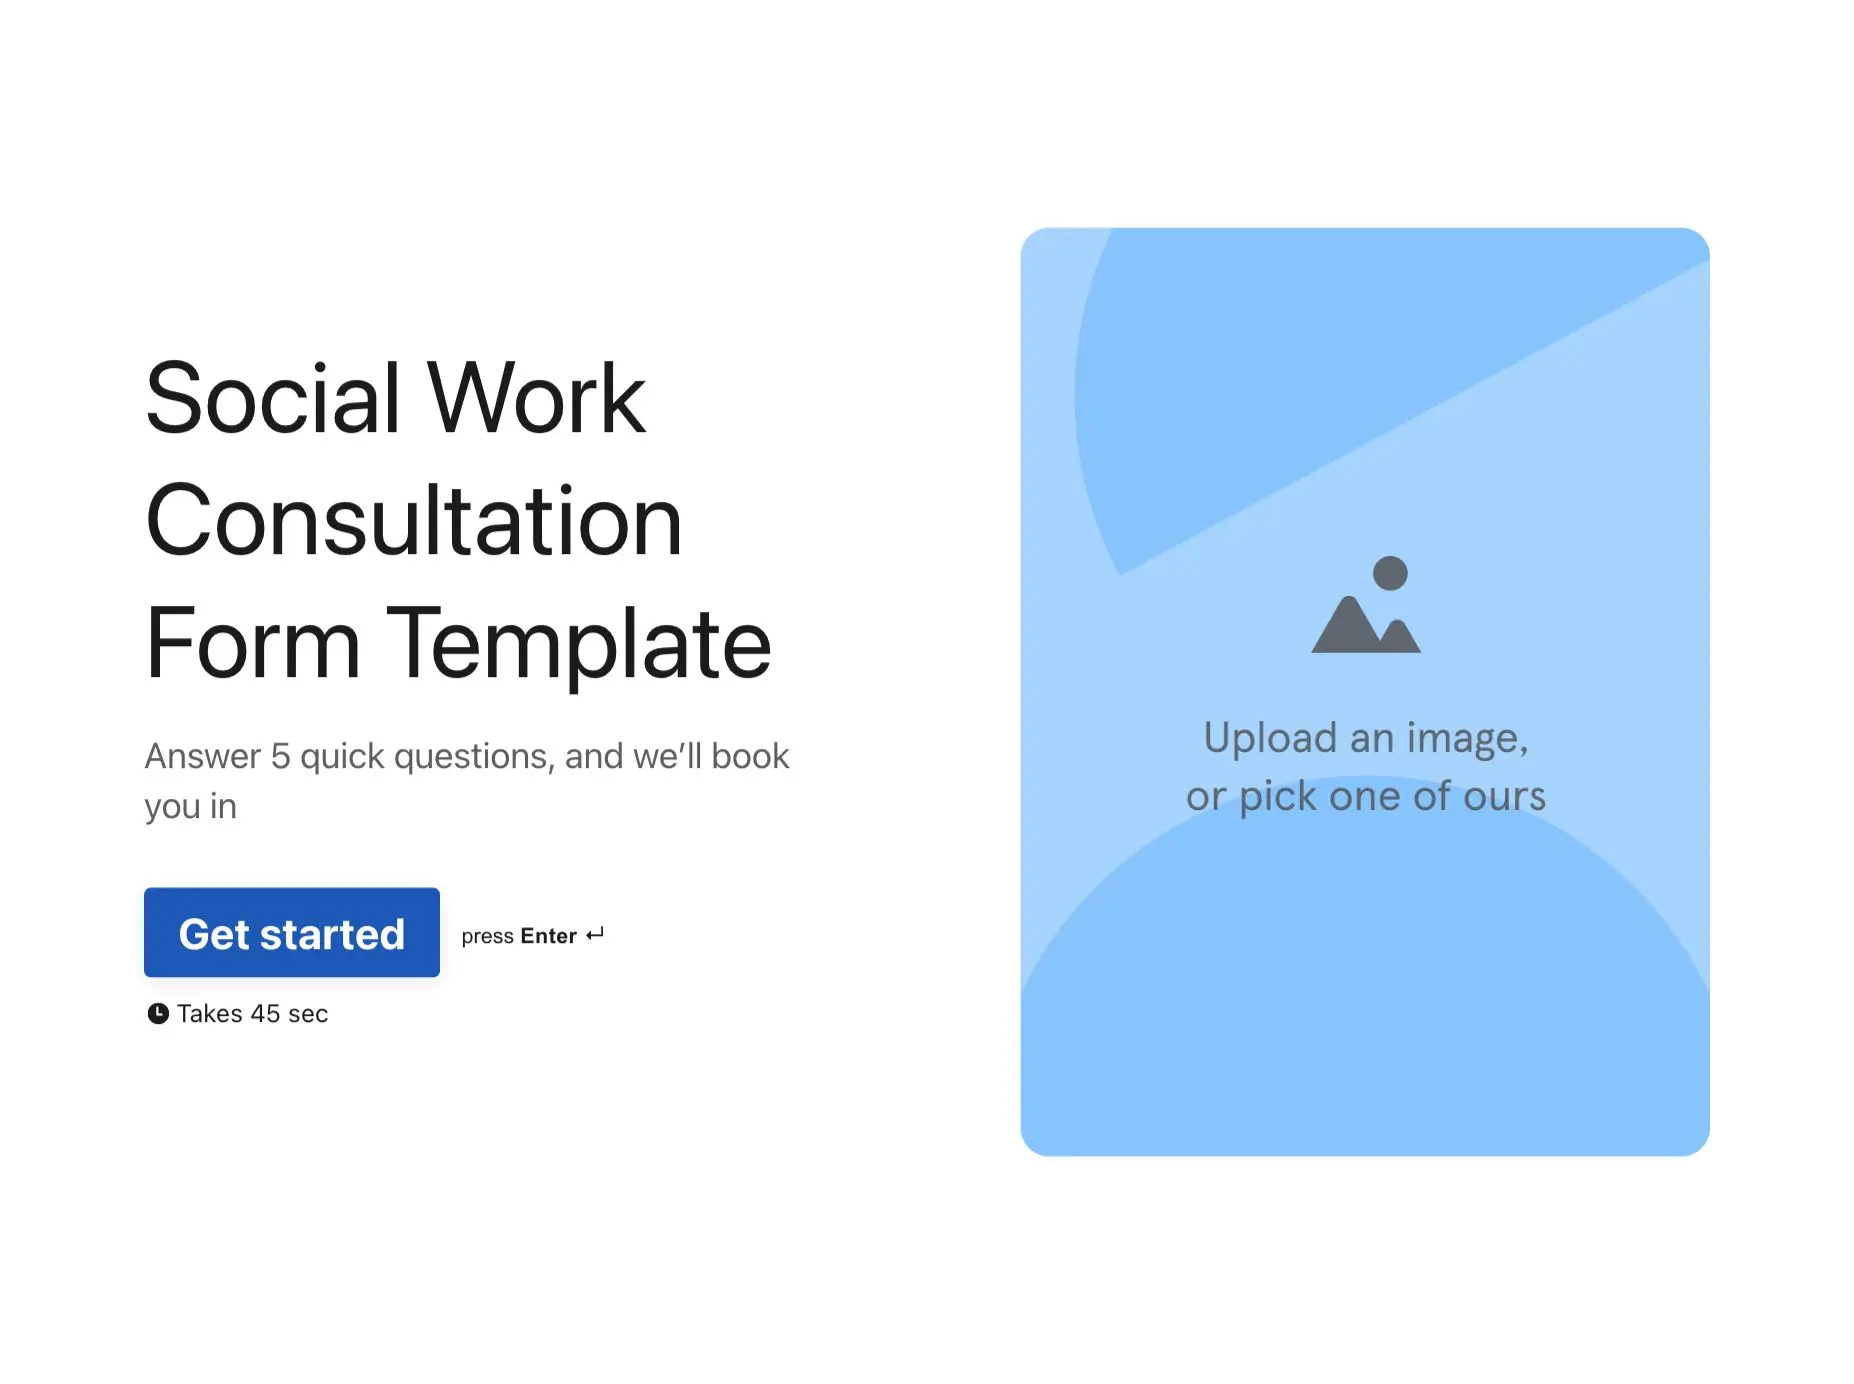 Social Work Consultation Form Template Hero